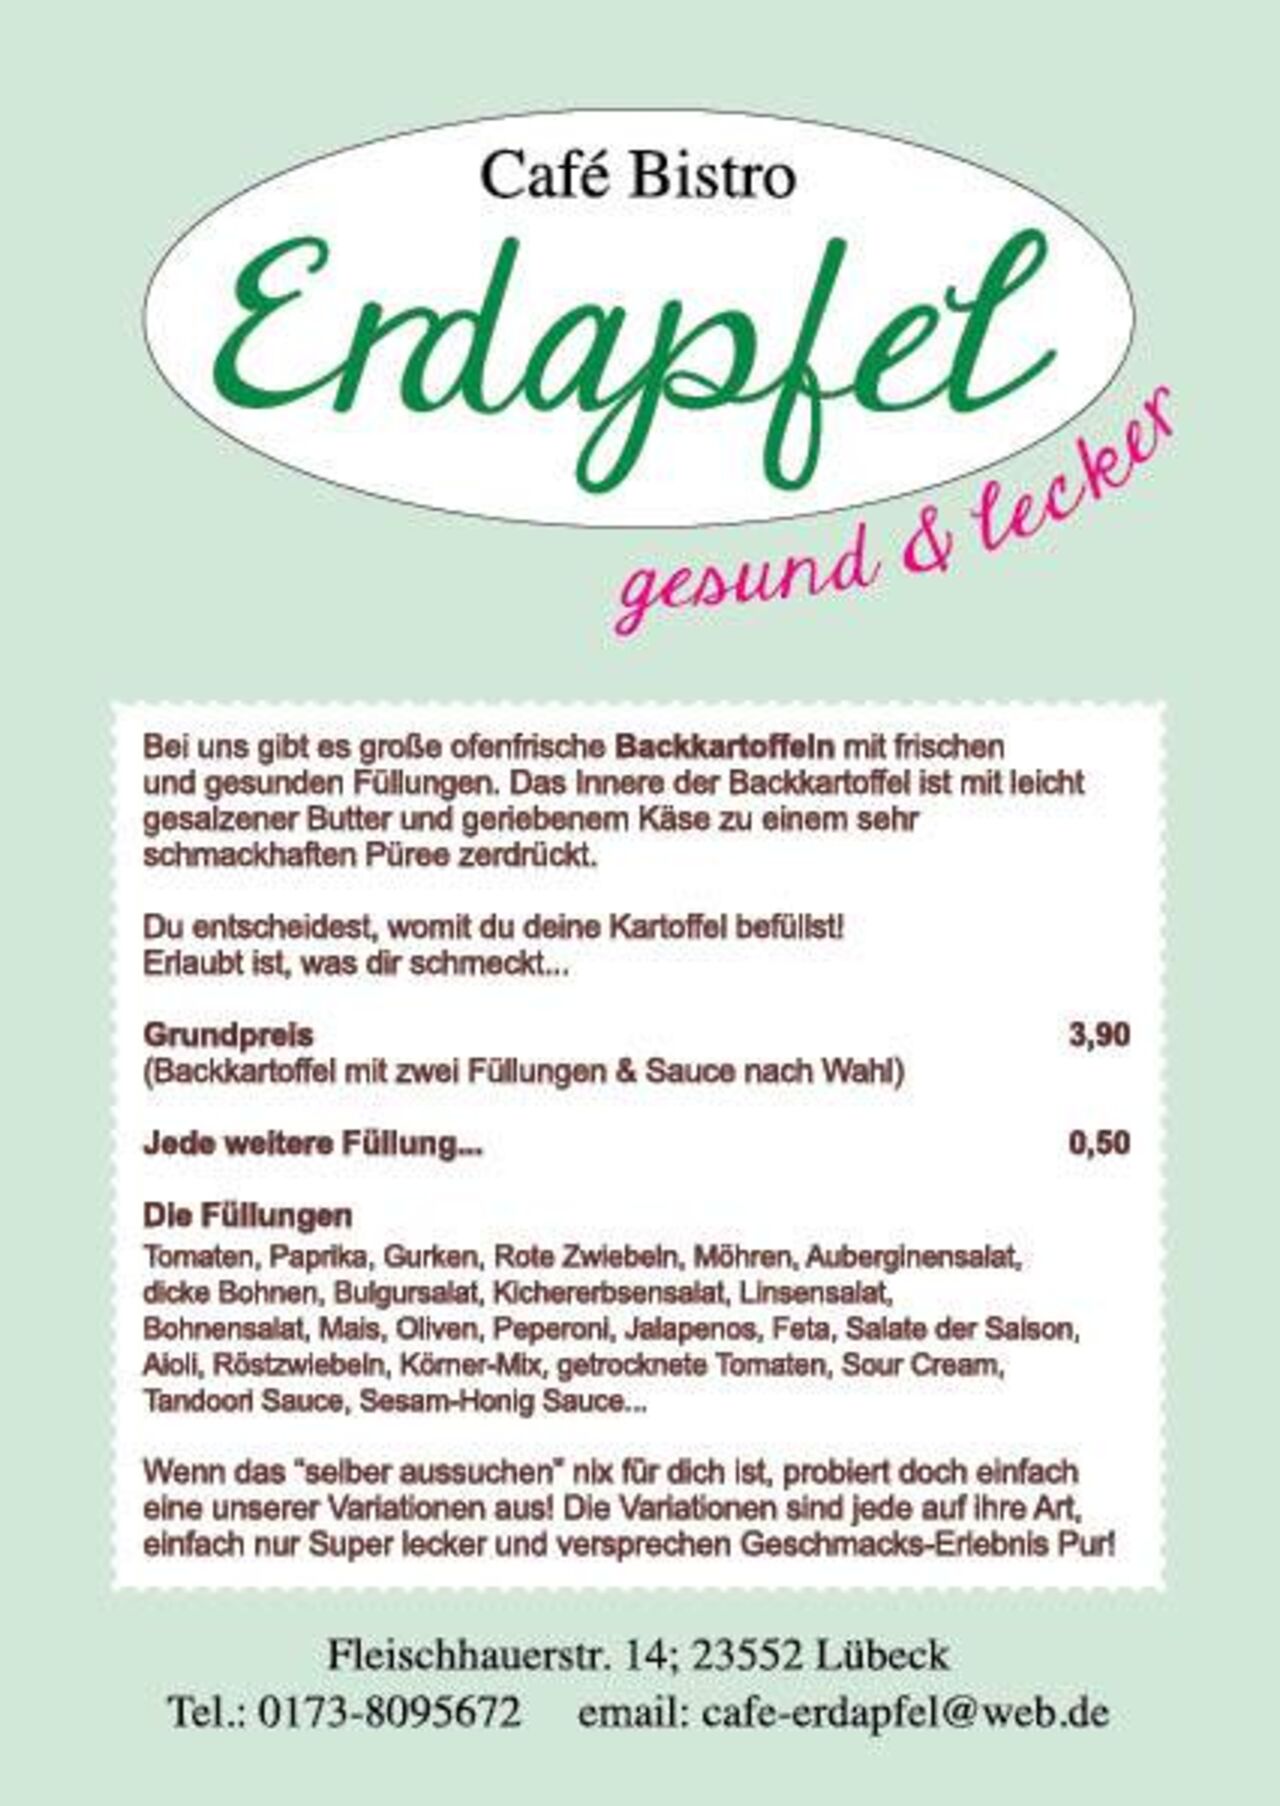 A photo of Café Erdapfel